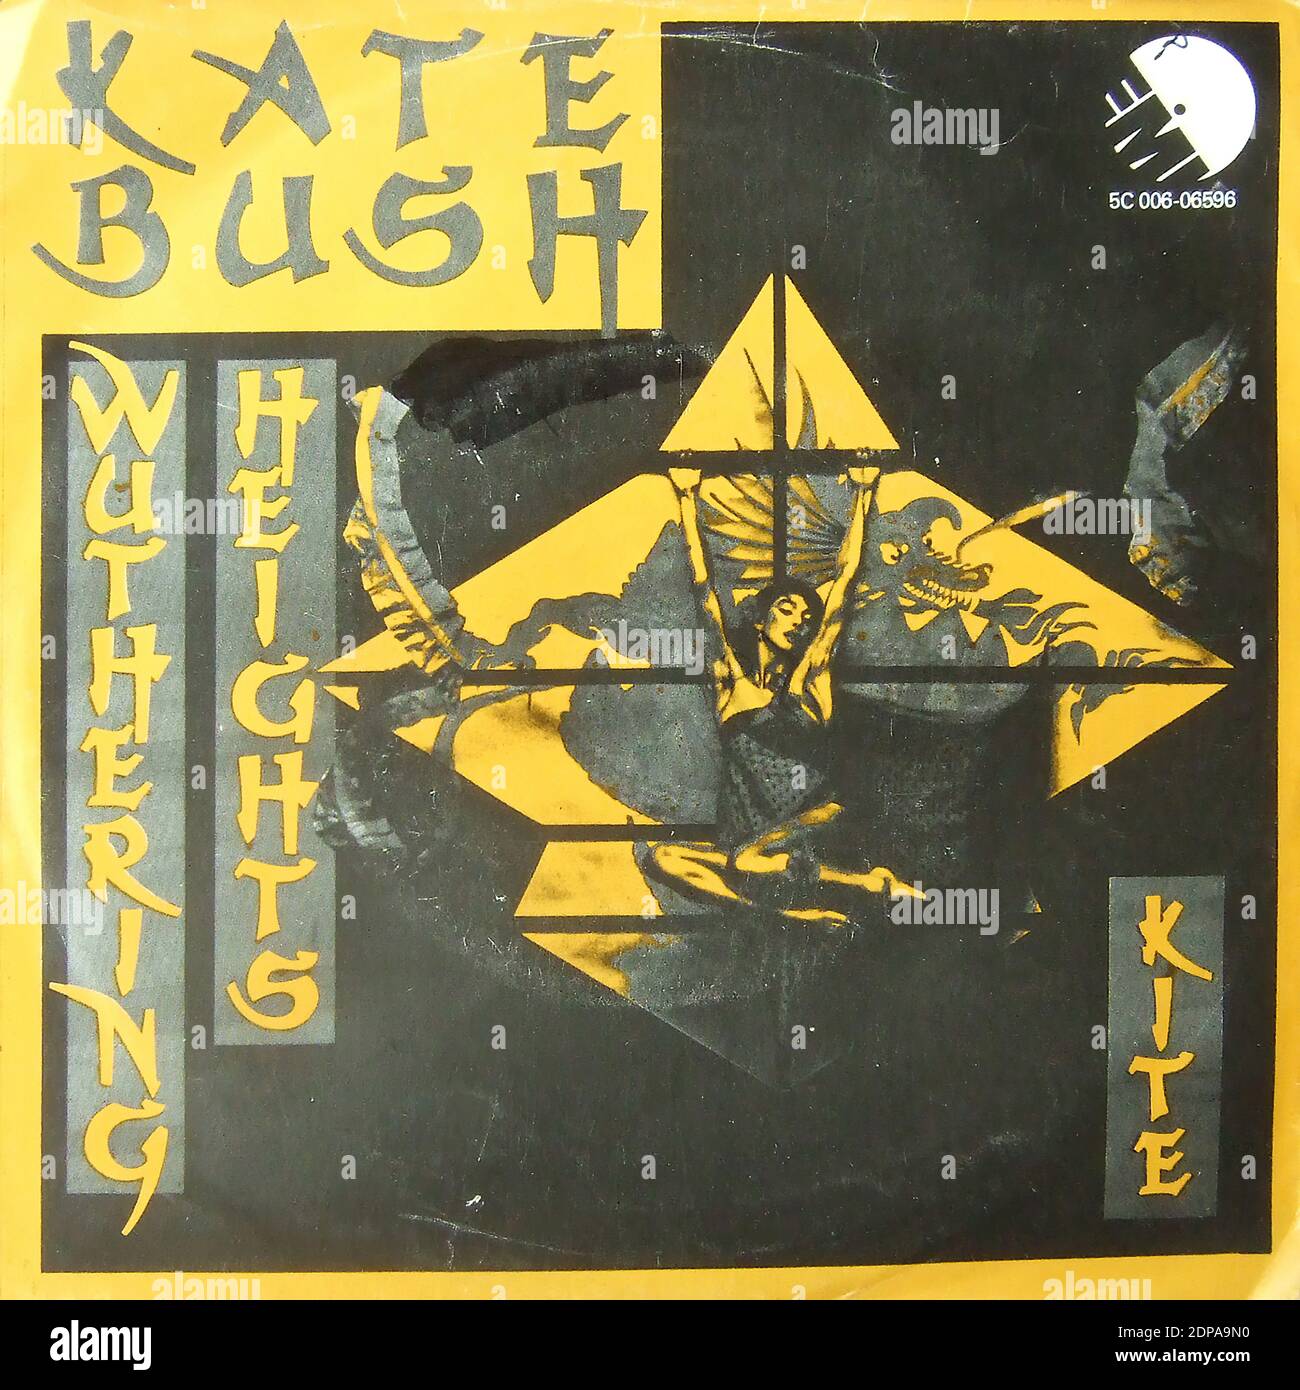 Kate Bush - Wuthering Kite, 7 inch Single 45rpm, EMI 5C 006-06596 - vinyl album Stock Photo -